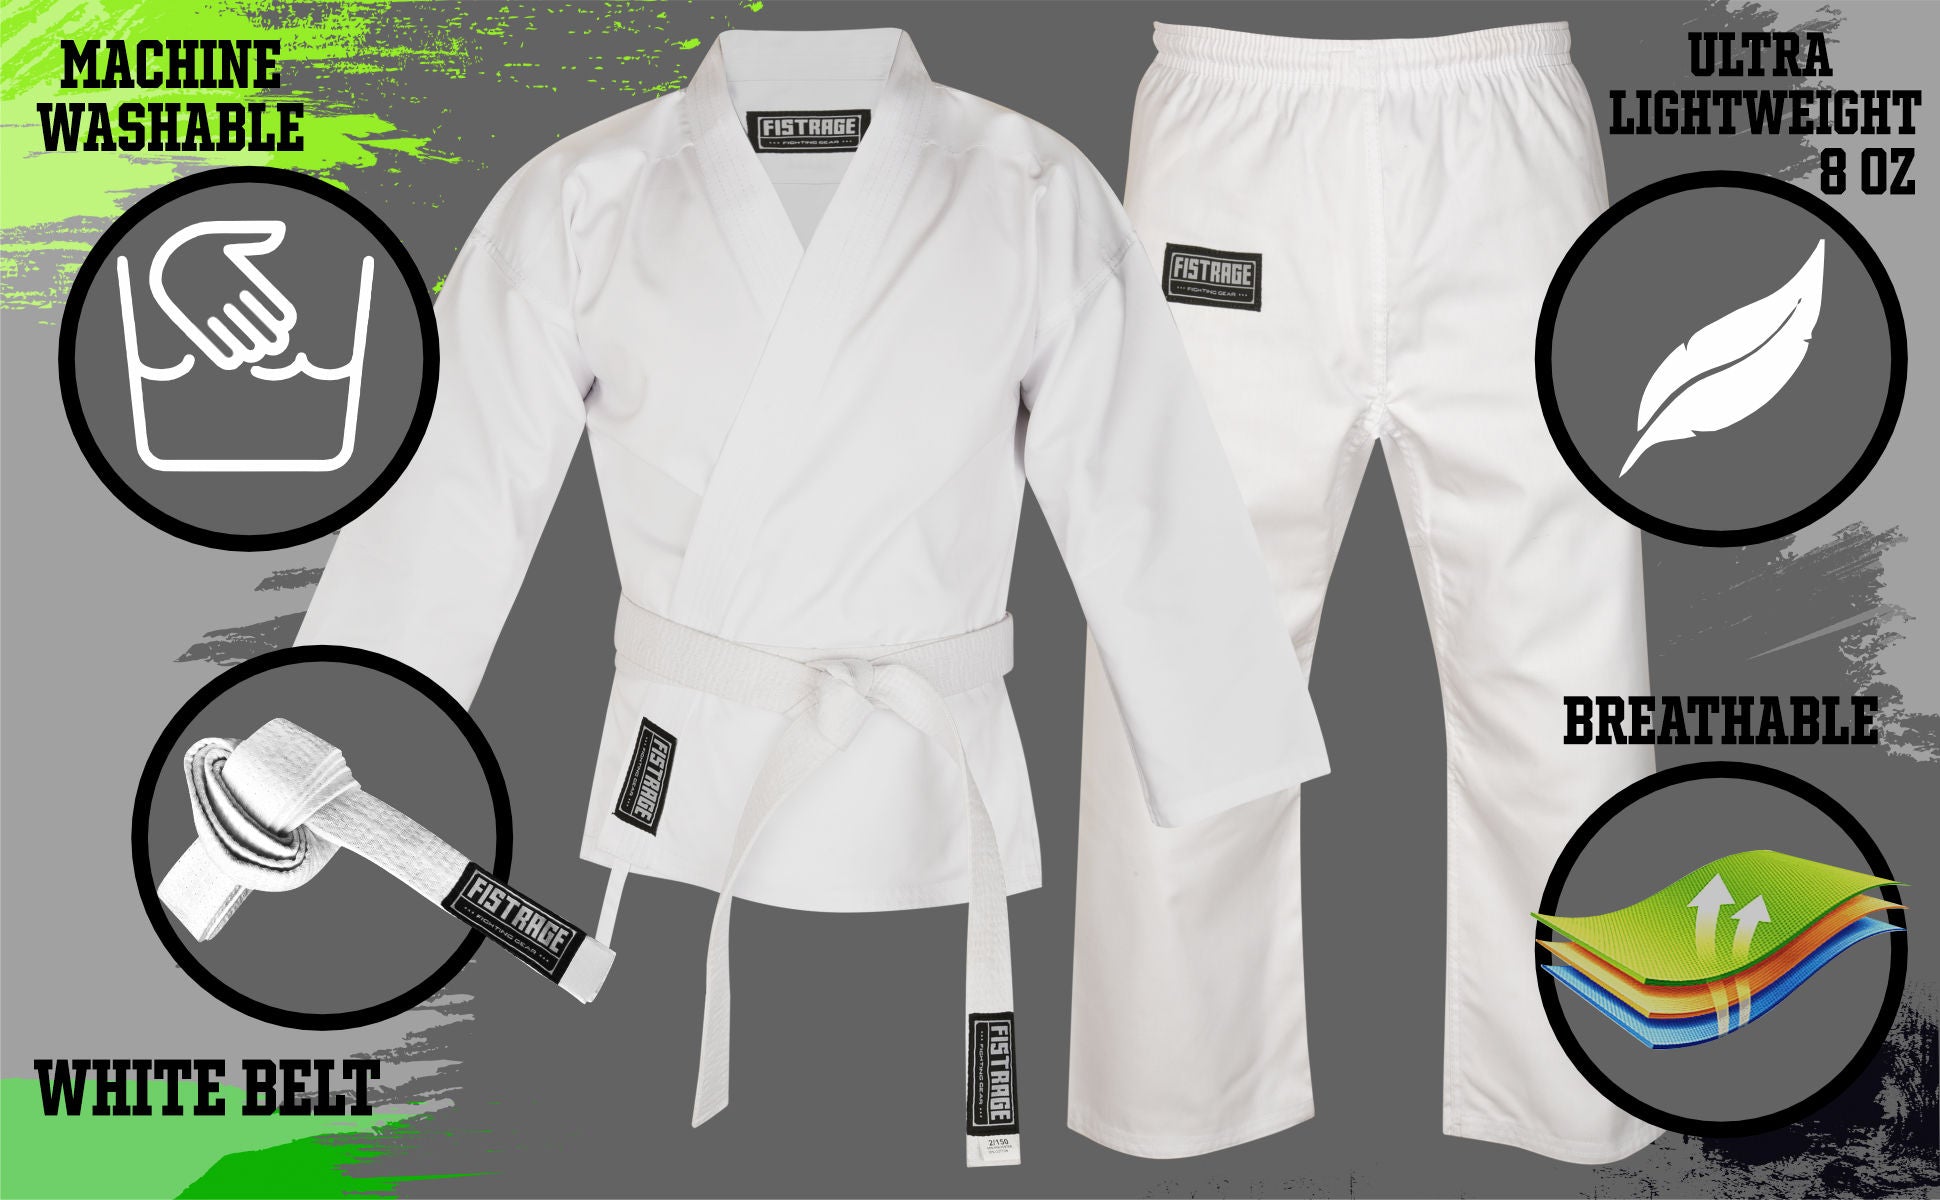 fistrage karate uniform lightweight breathable washable free white belt